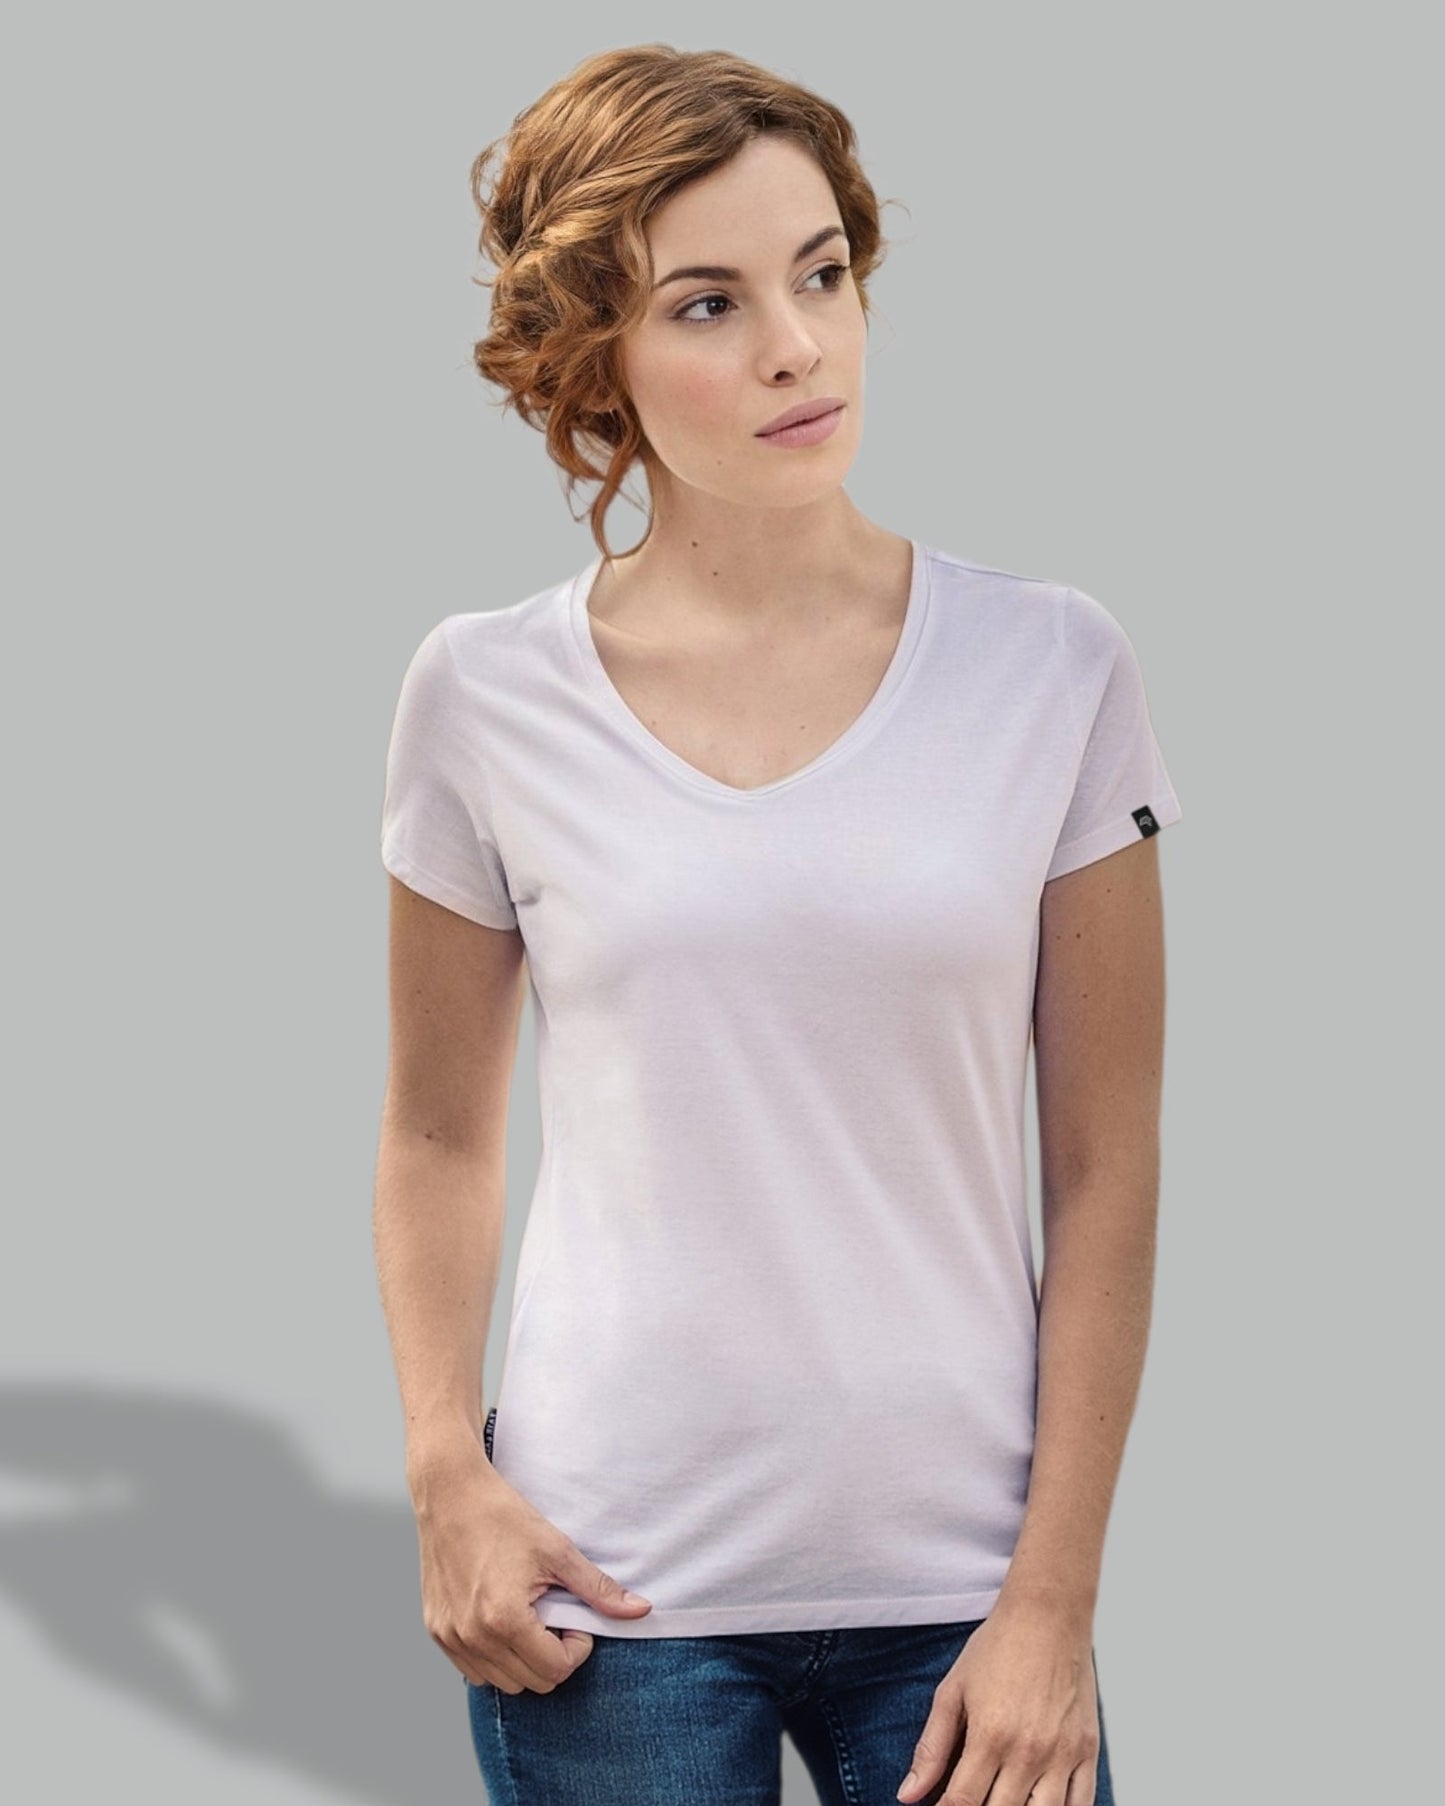 ― % ― RMH 0202/ ― Damen Luxury Bio-Baumwolle V-Neck T-Shirt - Heather Grau Melange [S]